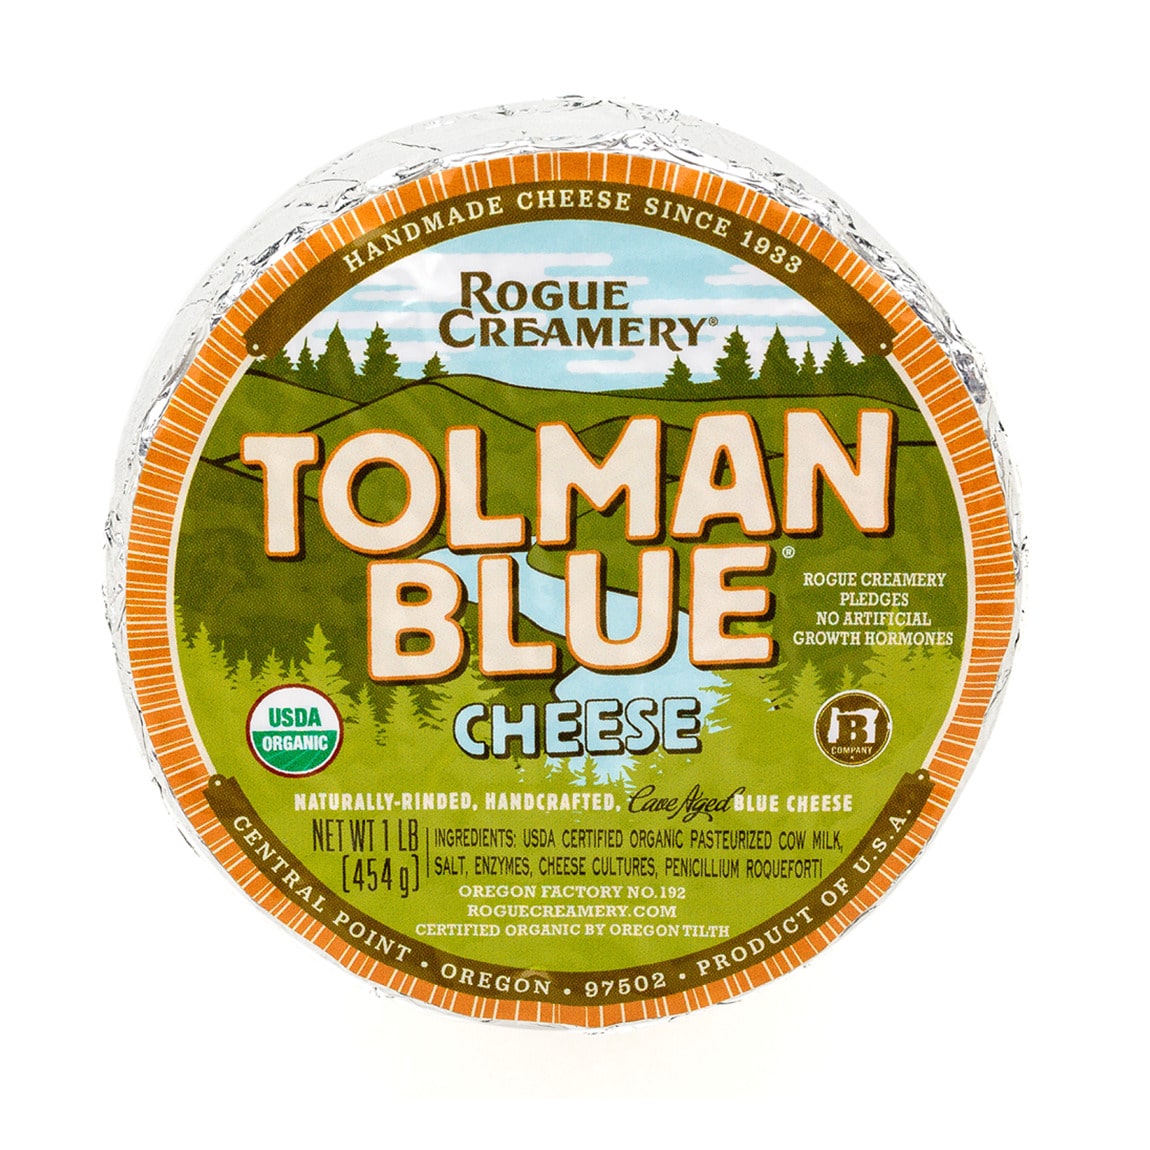 Rogue creamery tolman blue cheese packaging